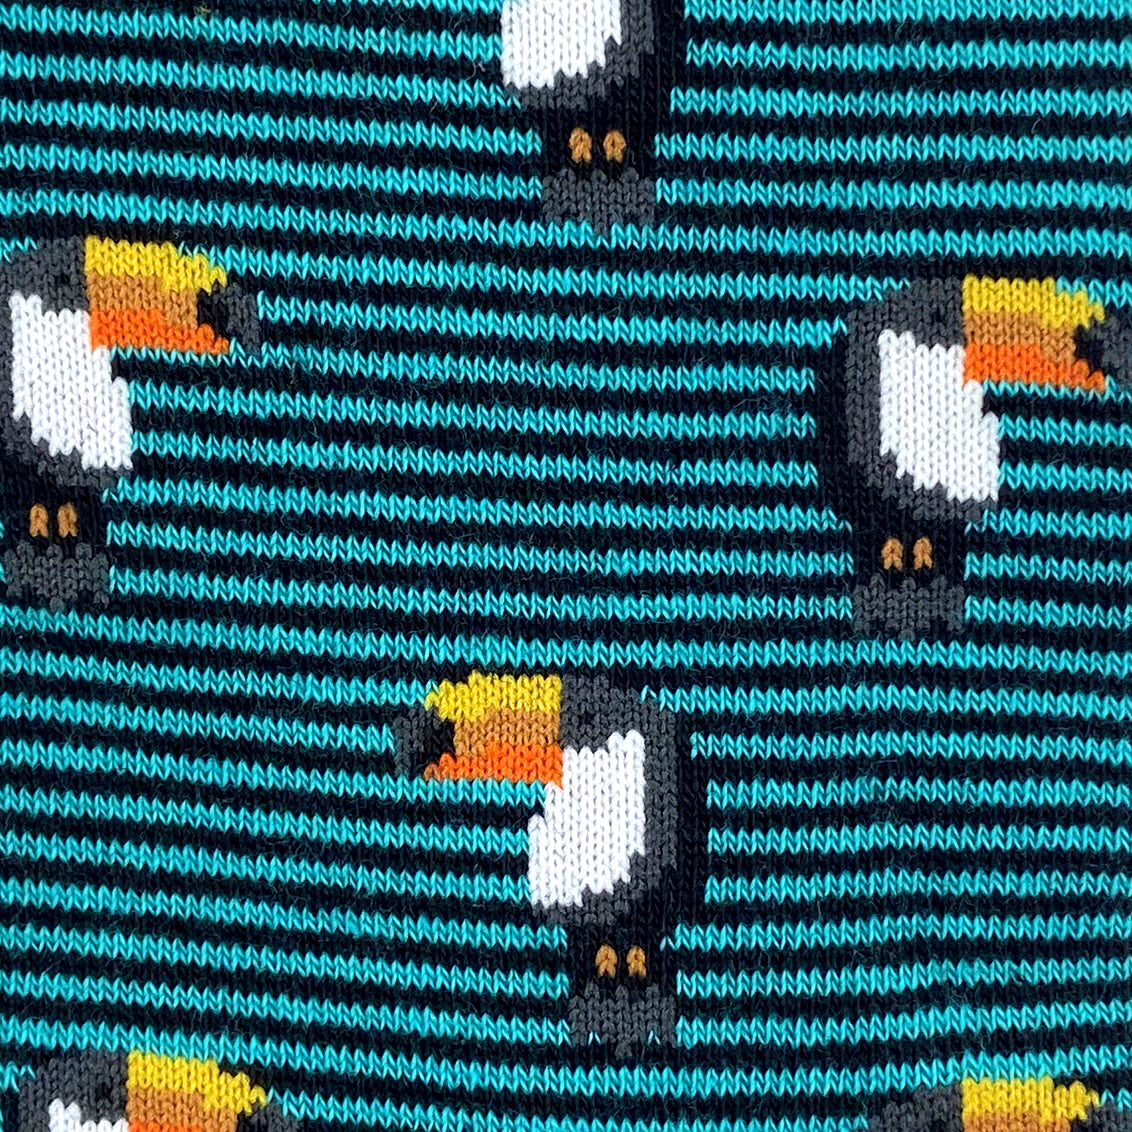 Classy Unisex Tropical Bird Toucan All Over Print Striped Novelty Socks